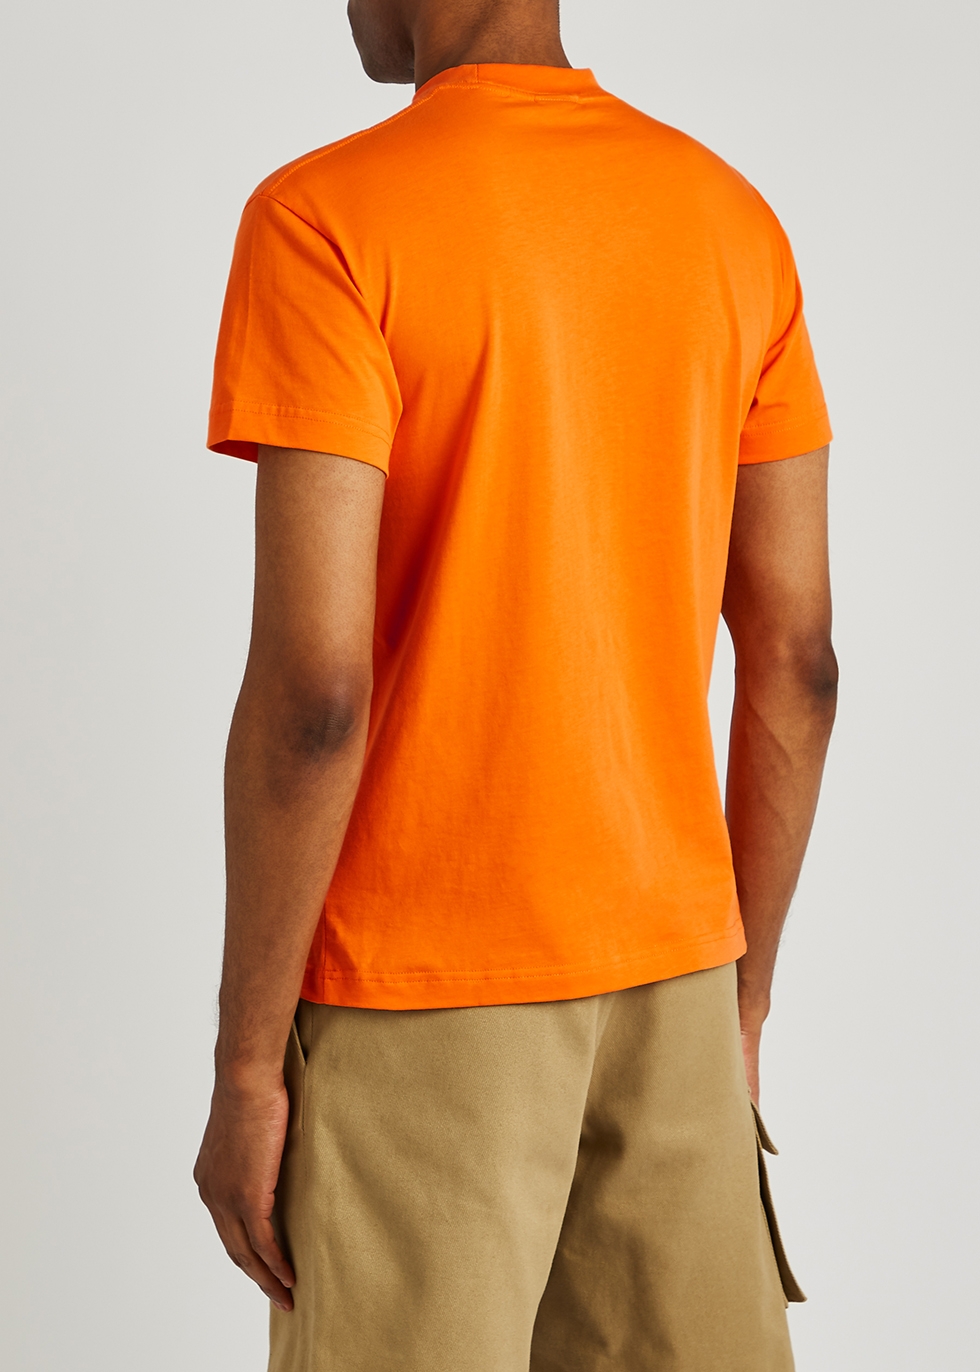 orange sport t shirt catalog